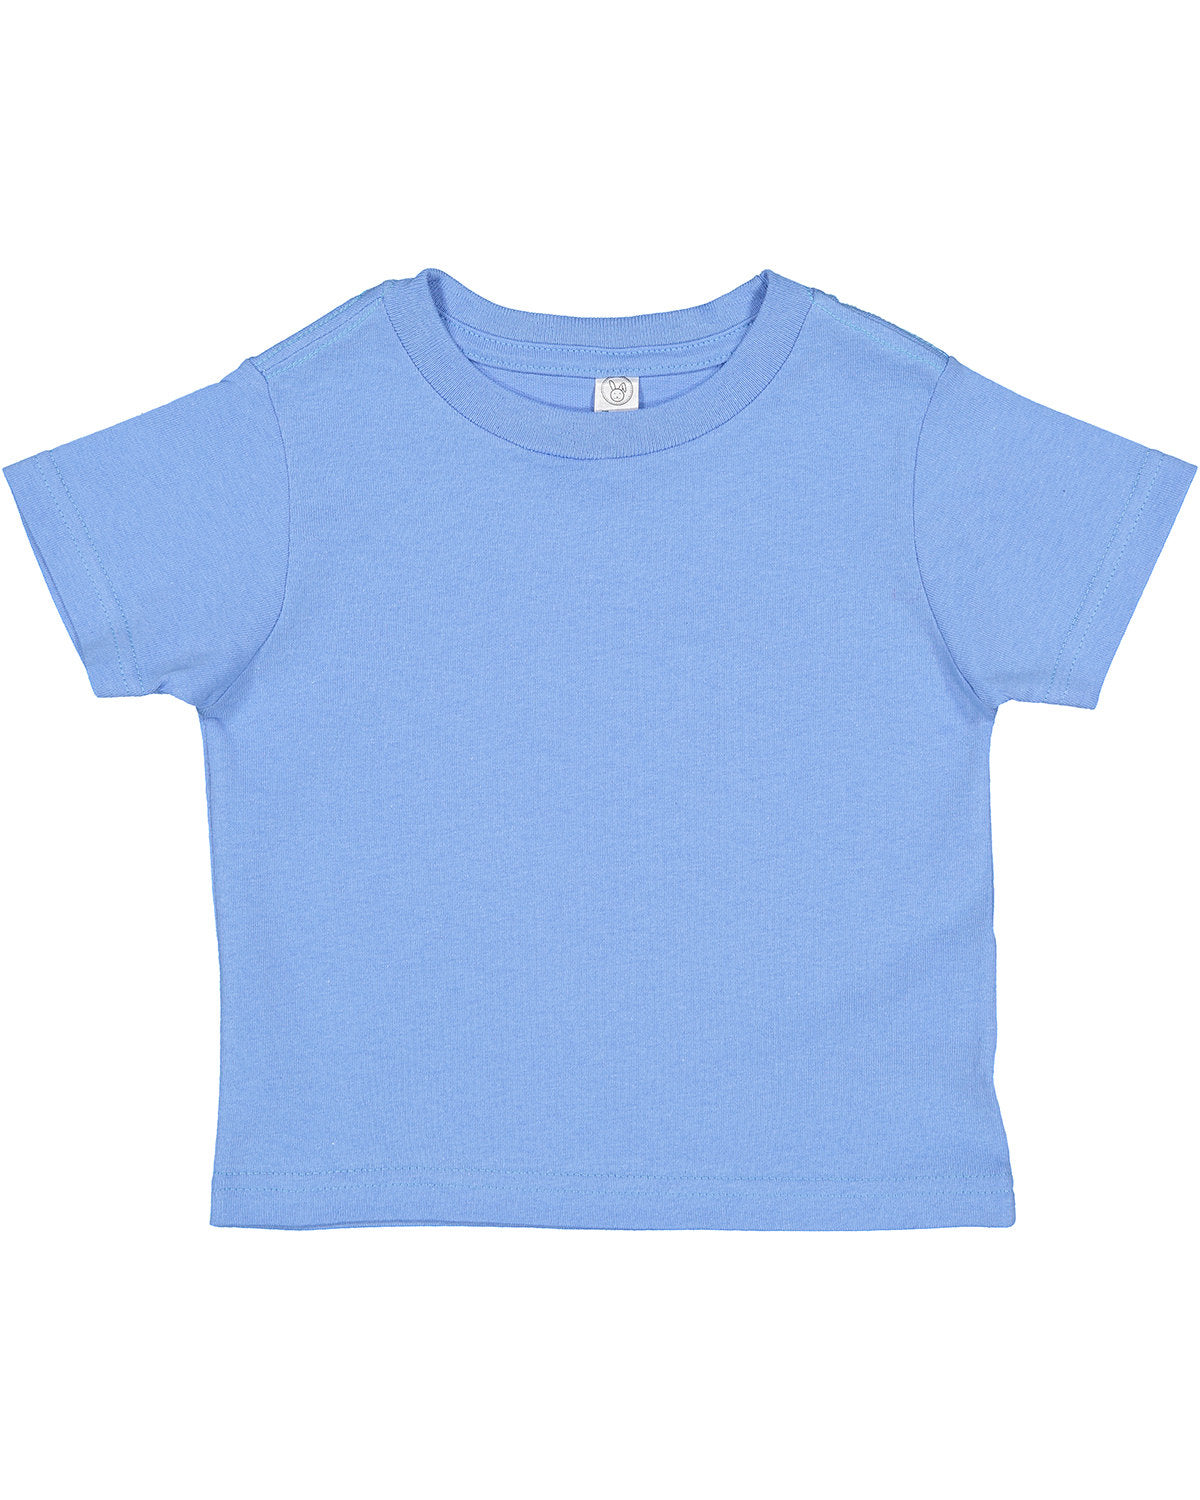 Rabbit Skins Toddler Cotton Jersey T-Shirt 2T / Carolina Blue